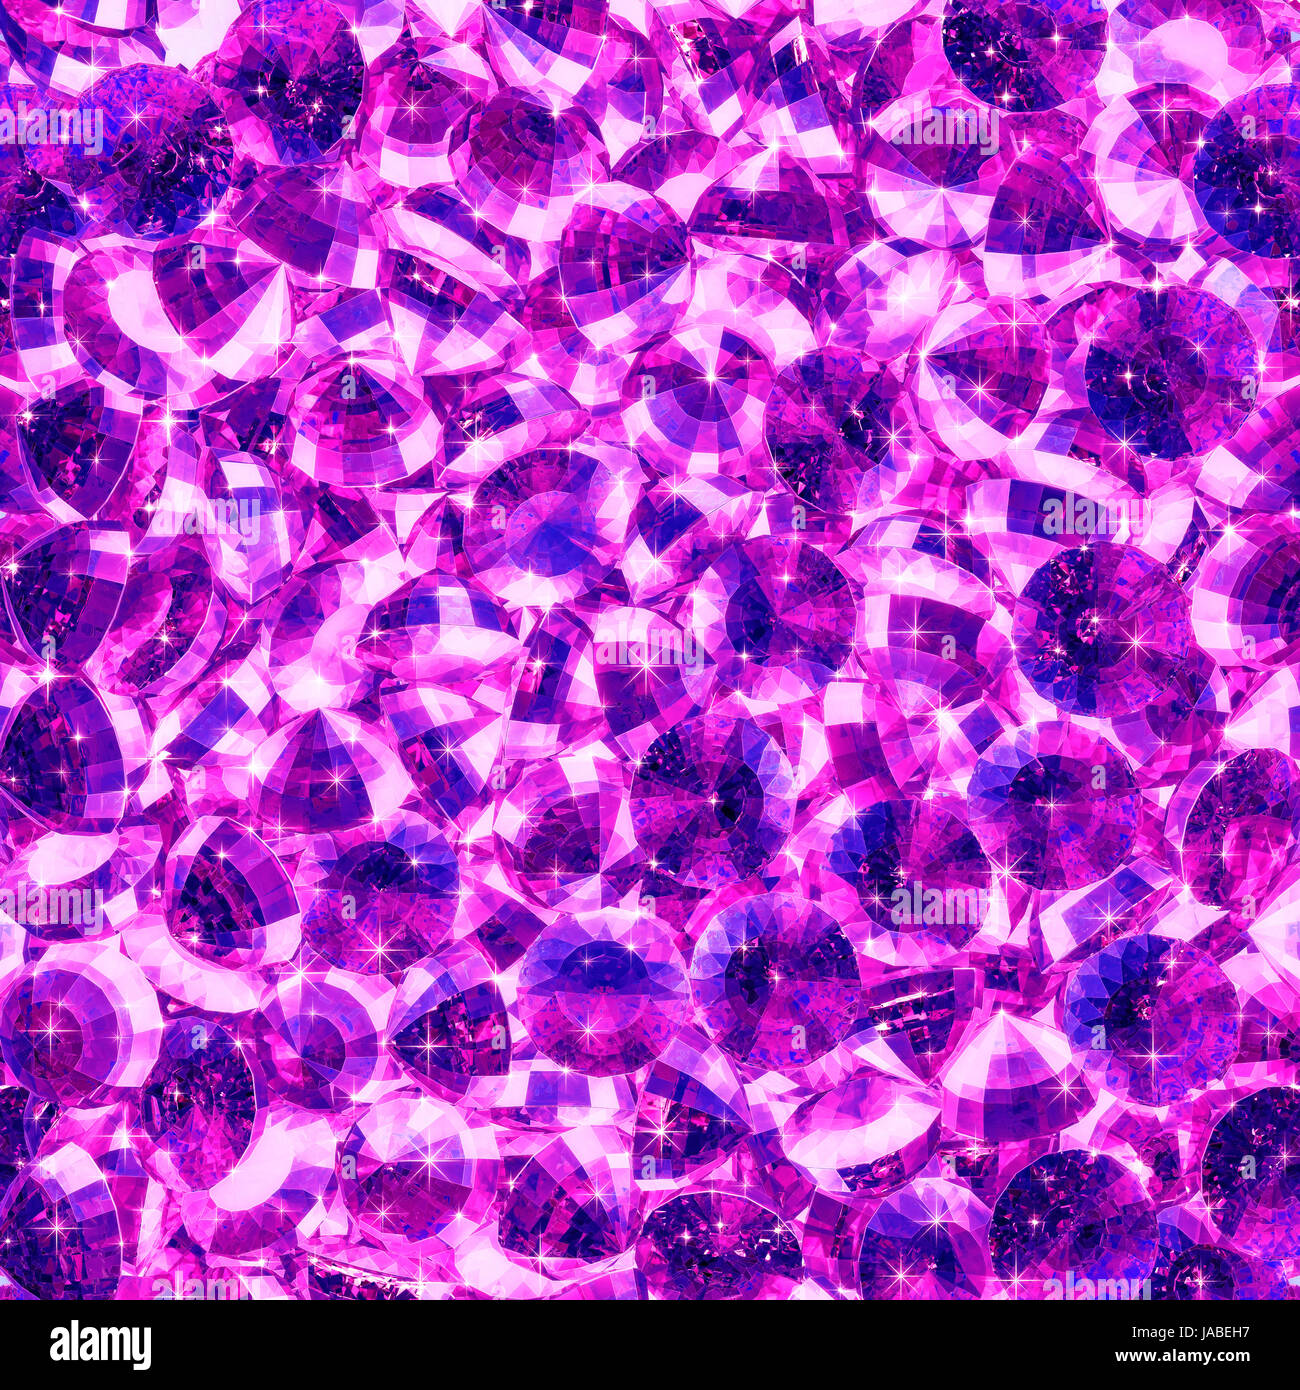 Pink diamonds background / 3D illustration of glittering pink ...